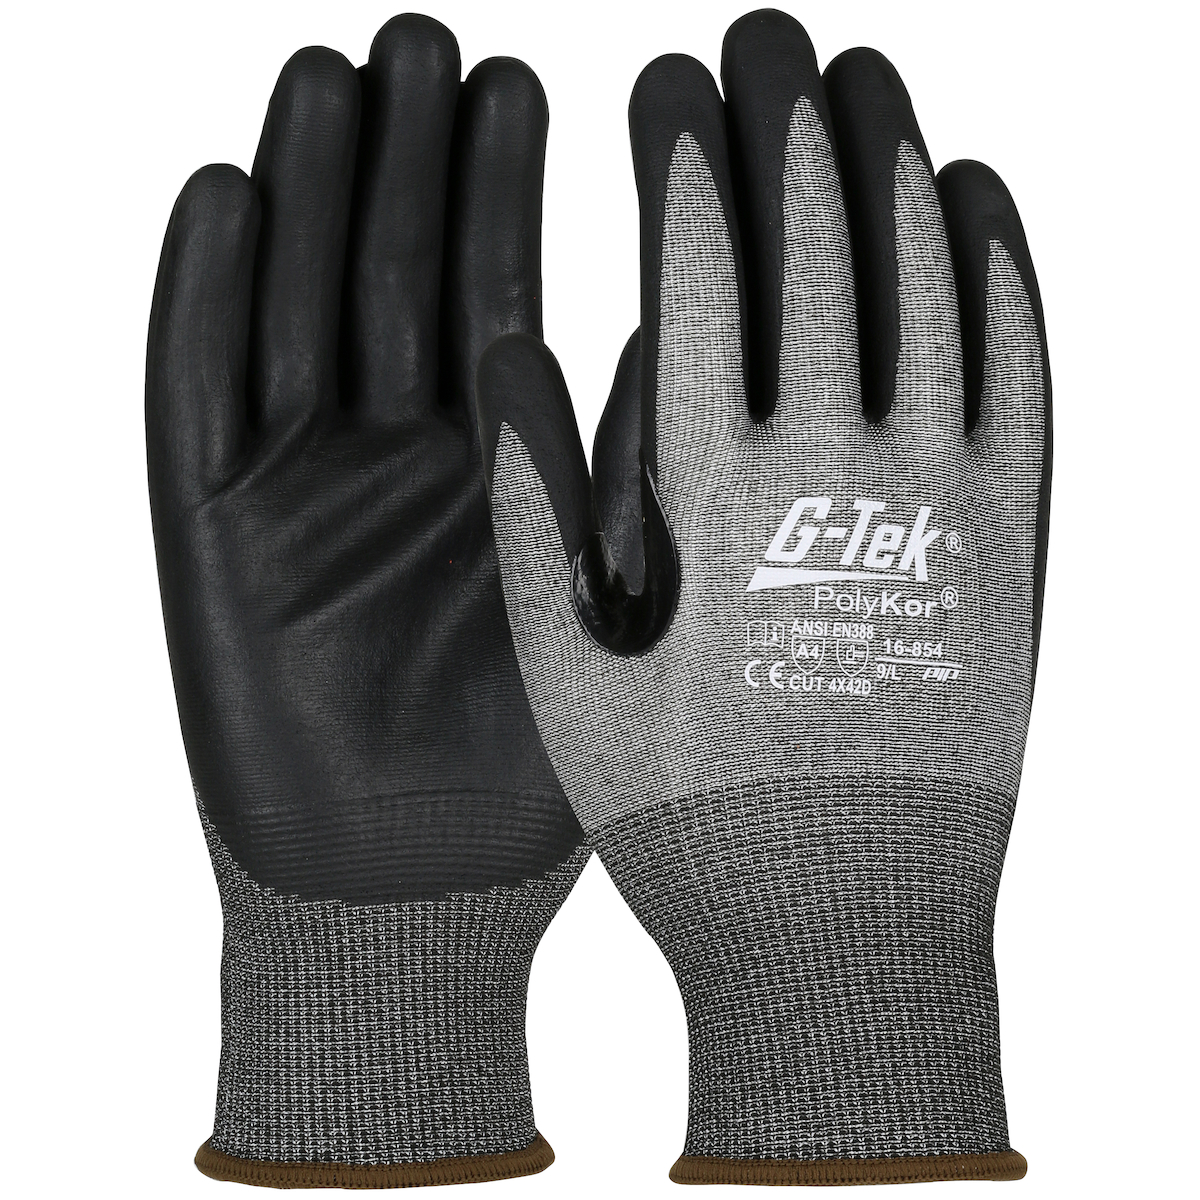 G-TEK POLYKOR 18G FOAM NITRILE PALM - Cut Resistant Gloves